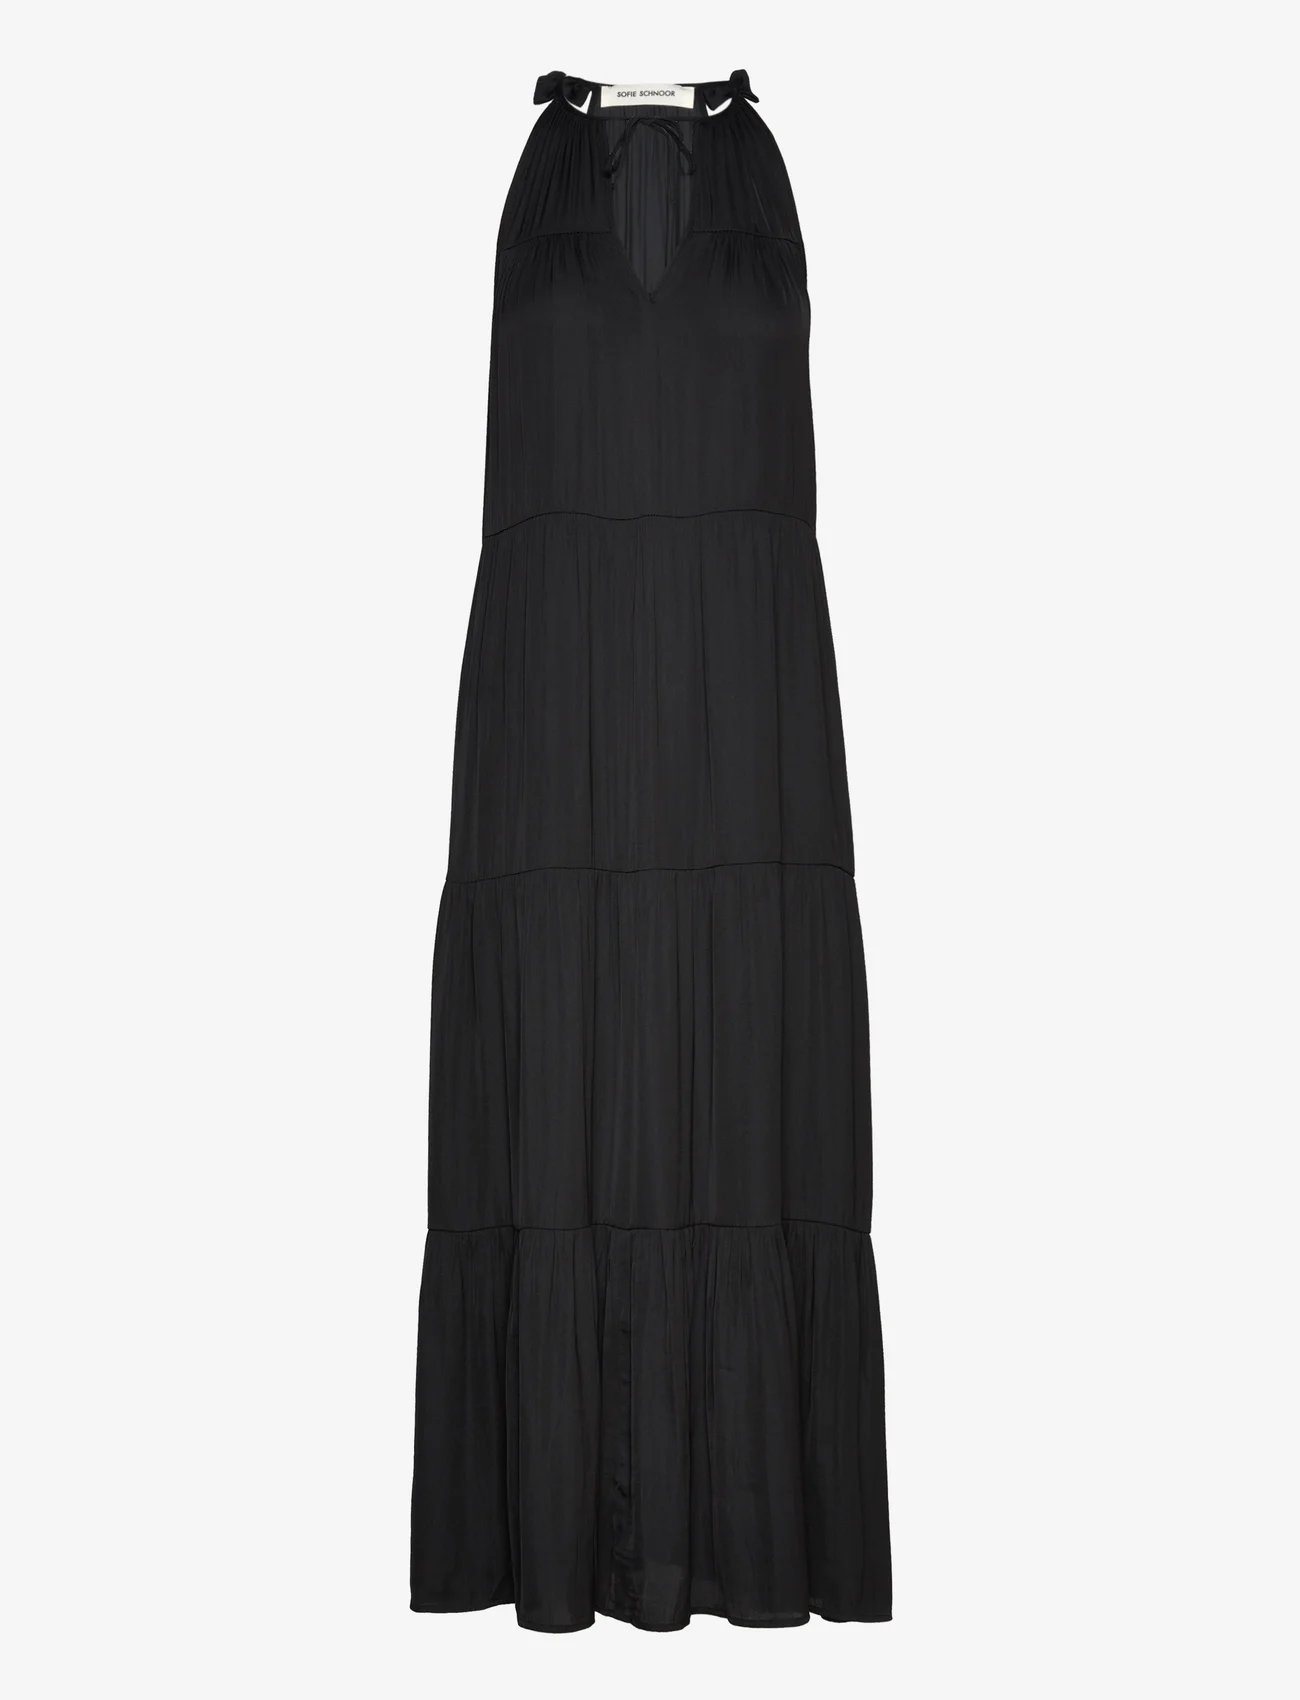 Sofie Schnoor - Long dress - maxi dresses - black - 0